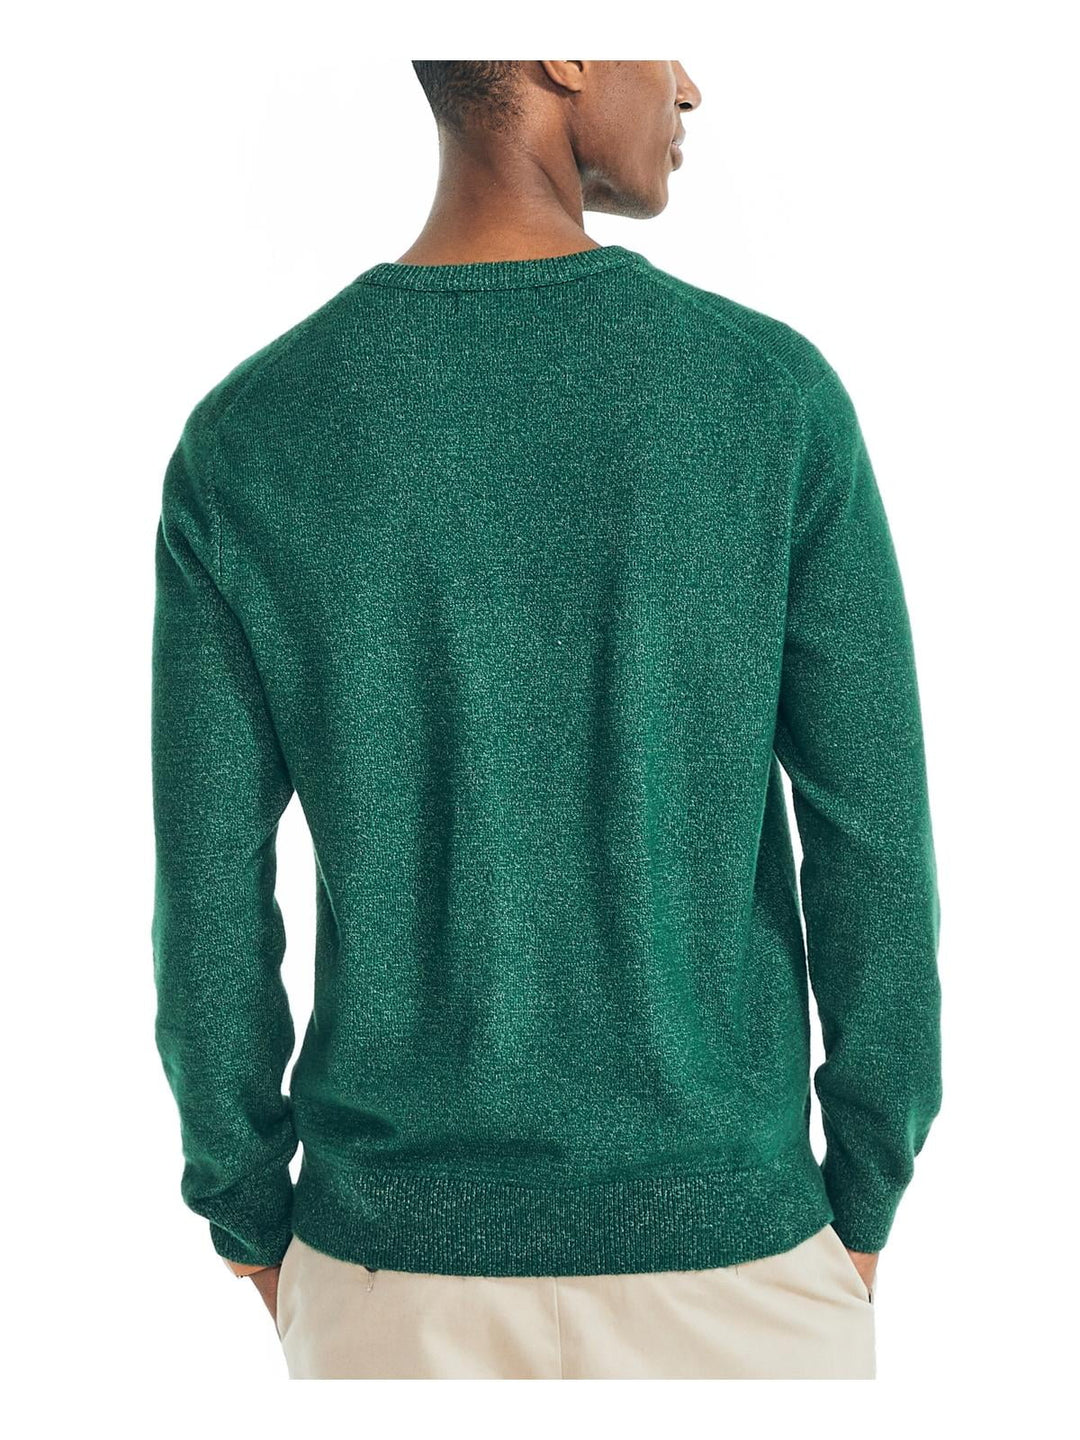 Nautica Men's Heathered Long Sleeve Crewneck Sweater Green Size XX-Large